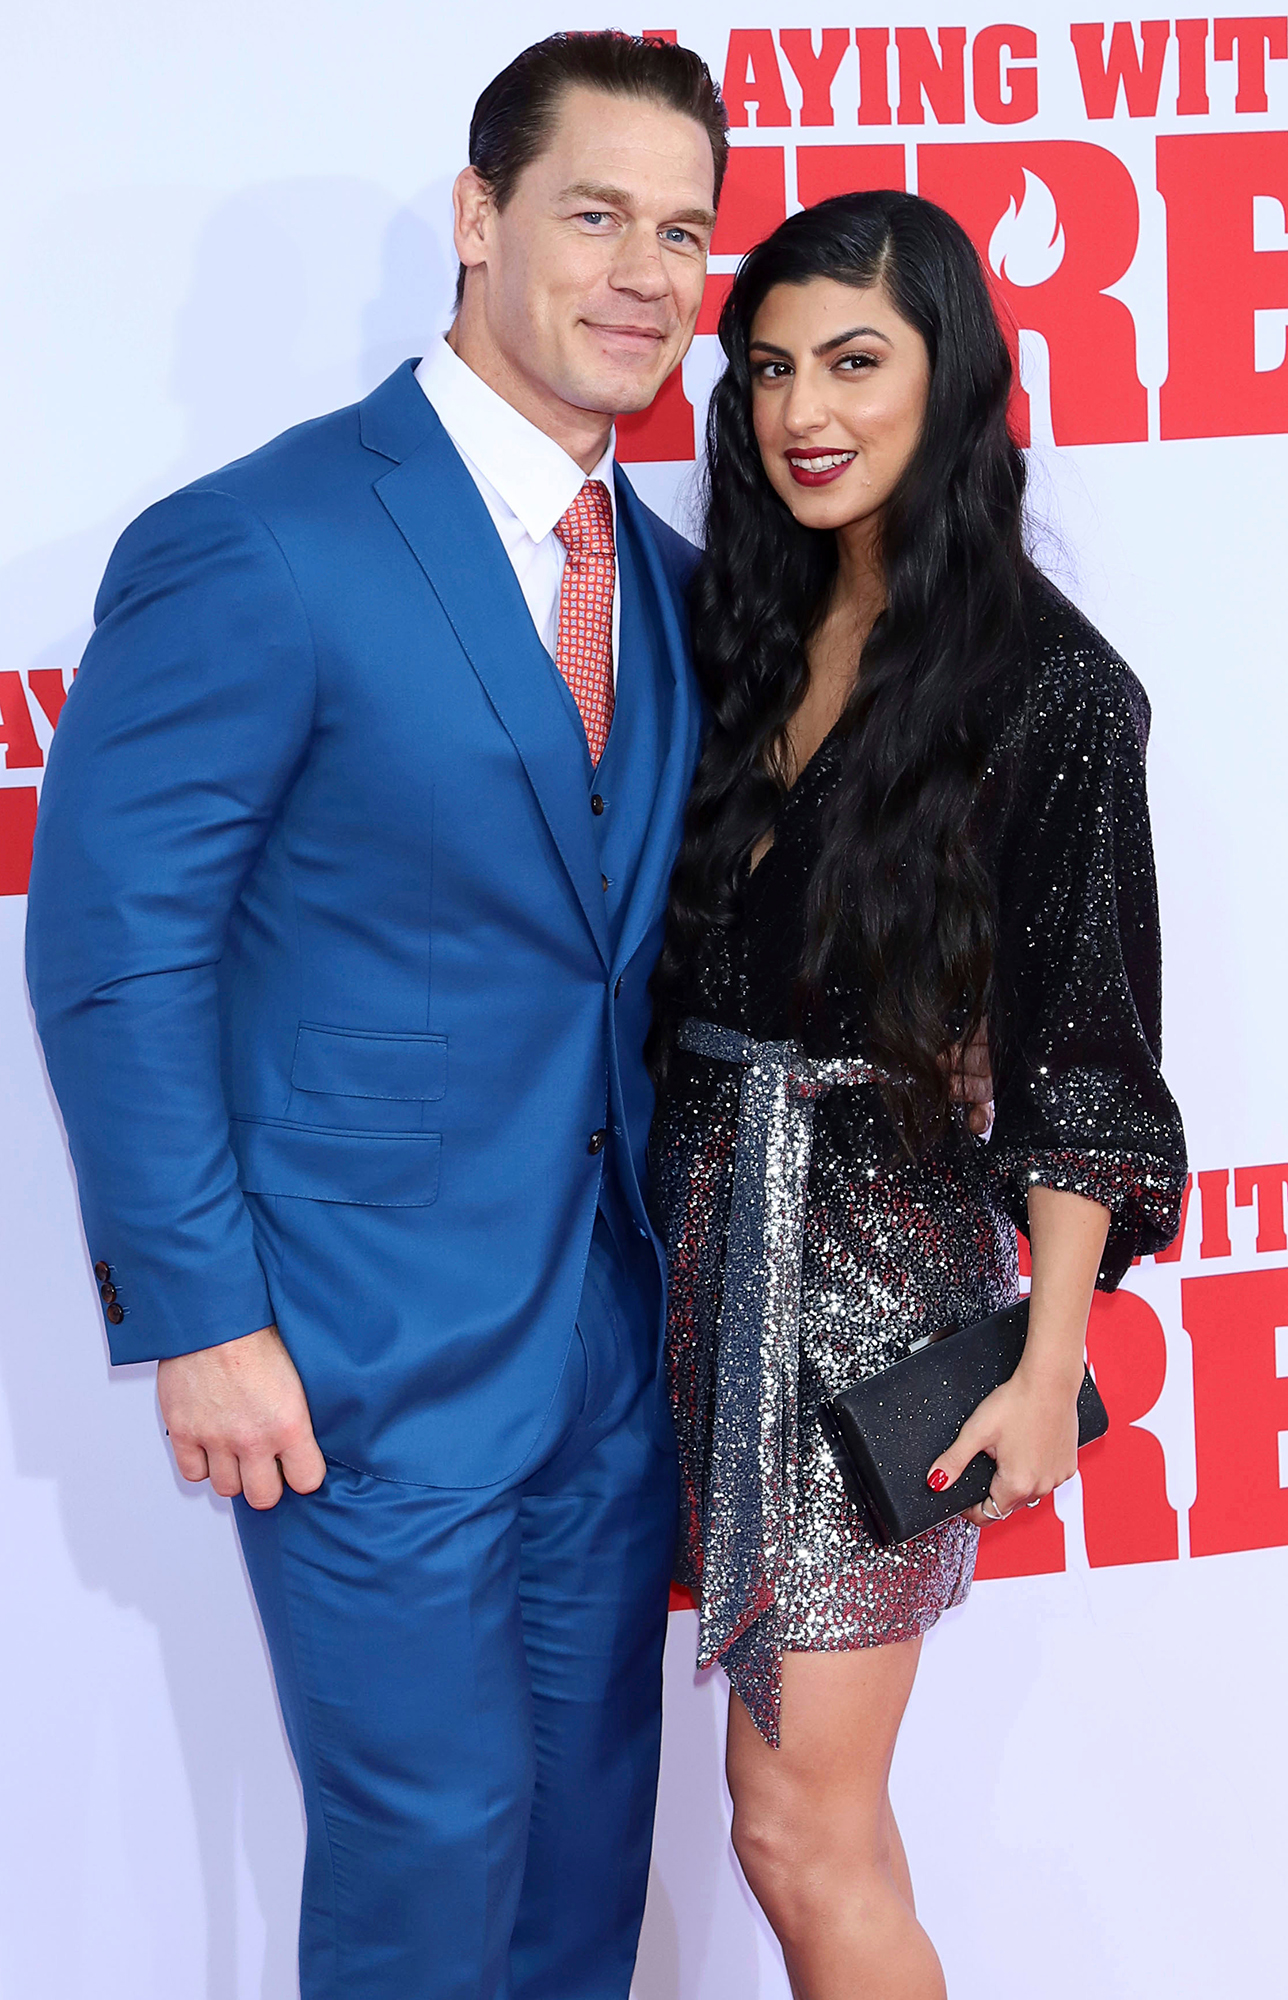 Who Is Shay Shariatzadeh (John Cena Wife)? WWE Superstar Relationship